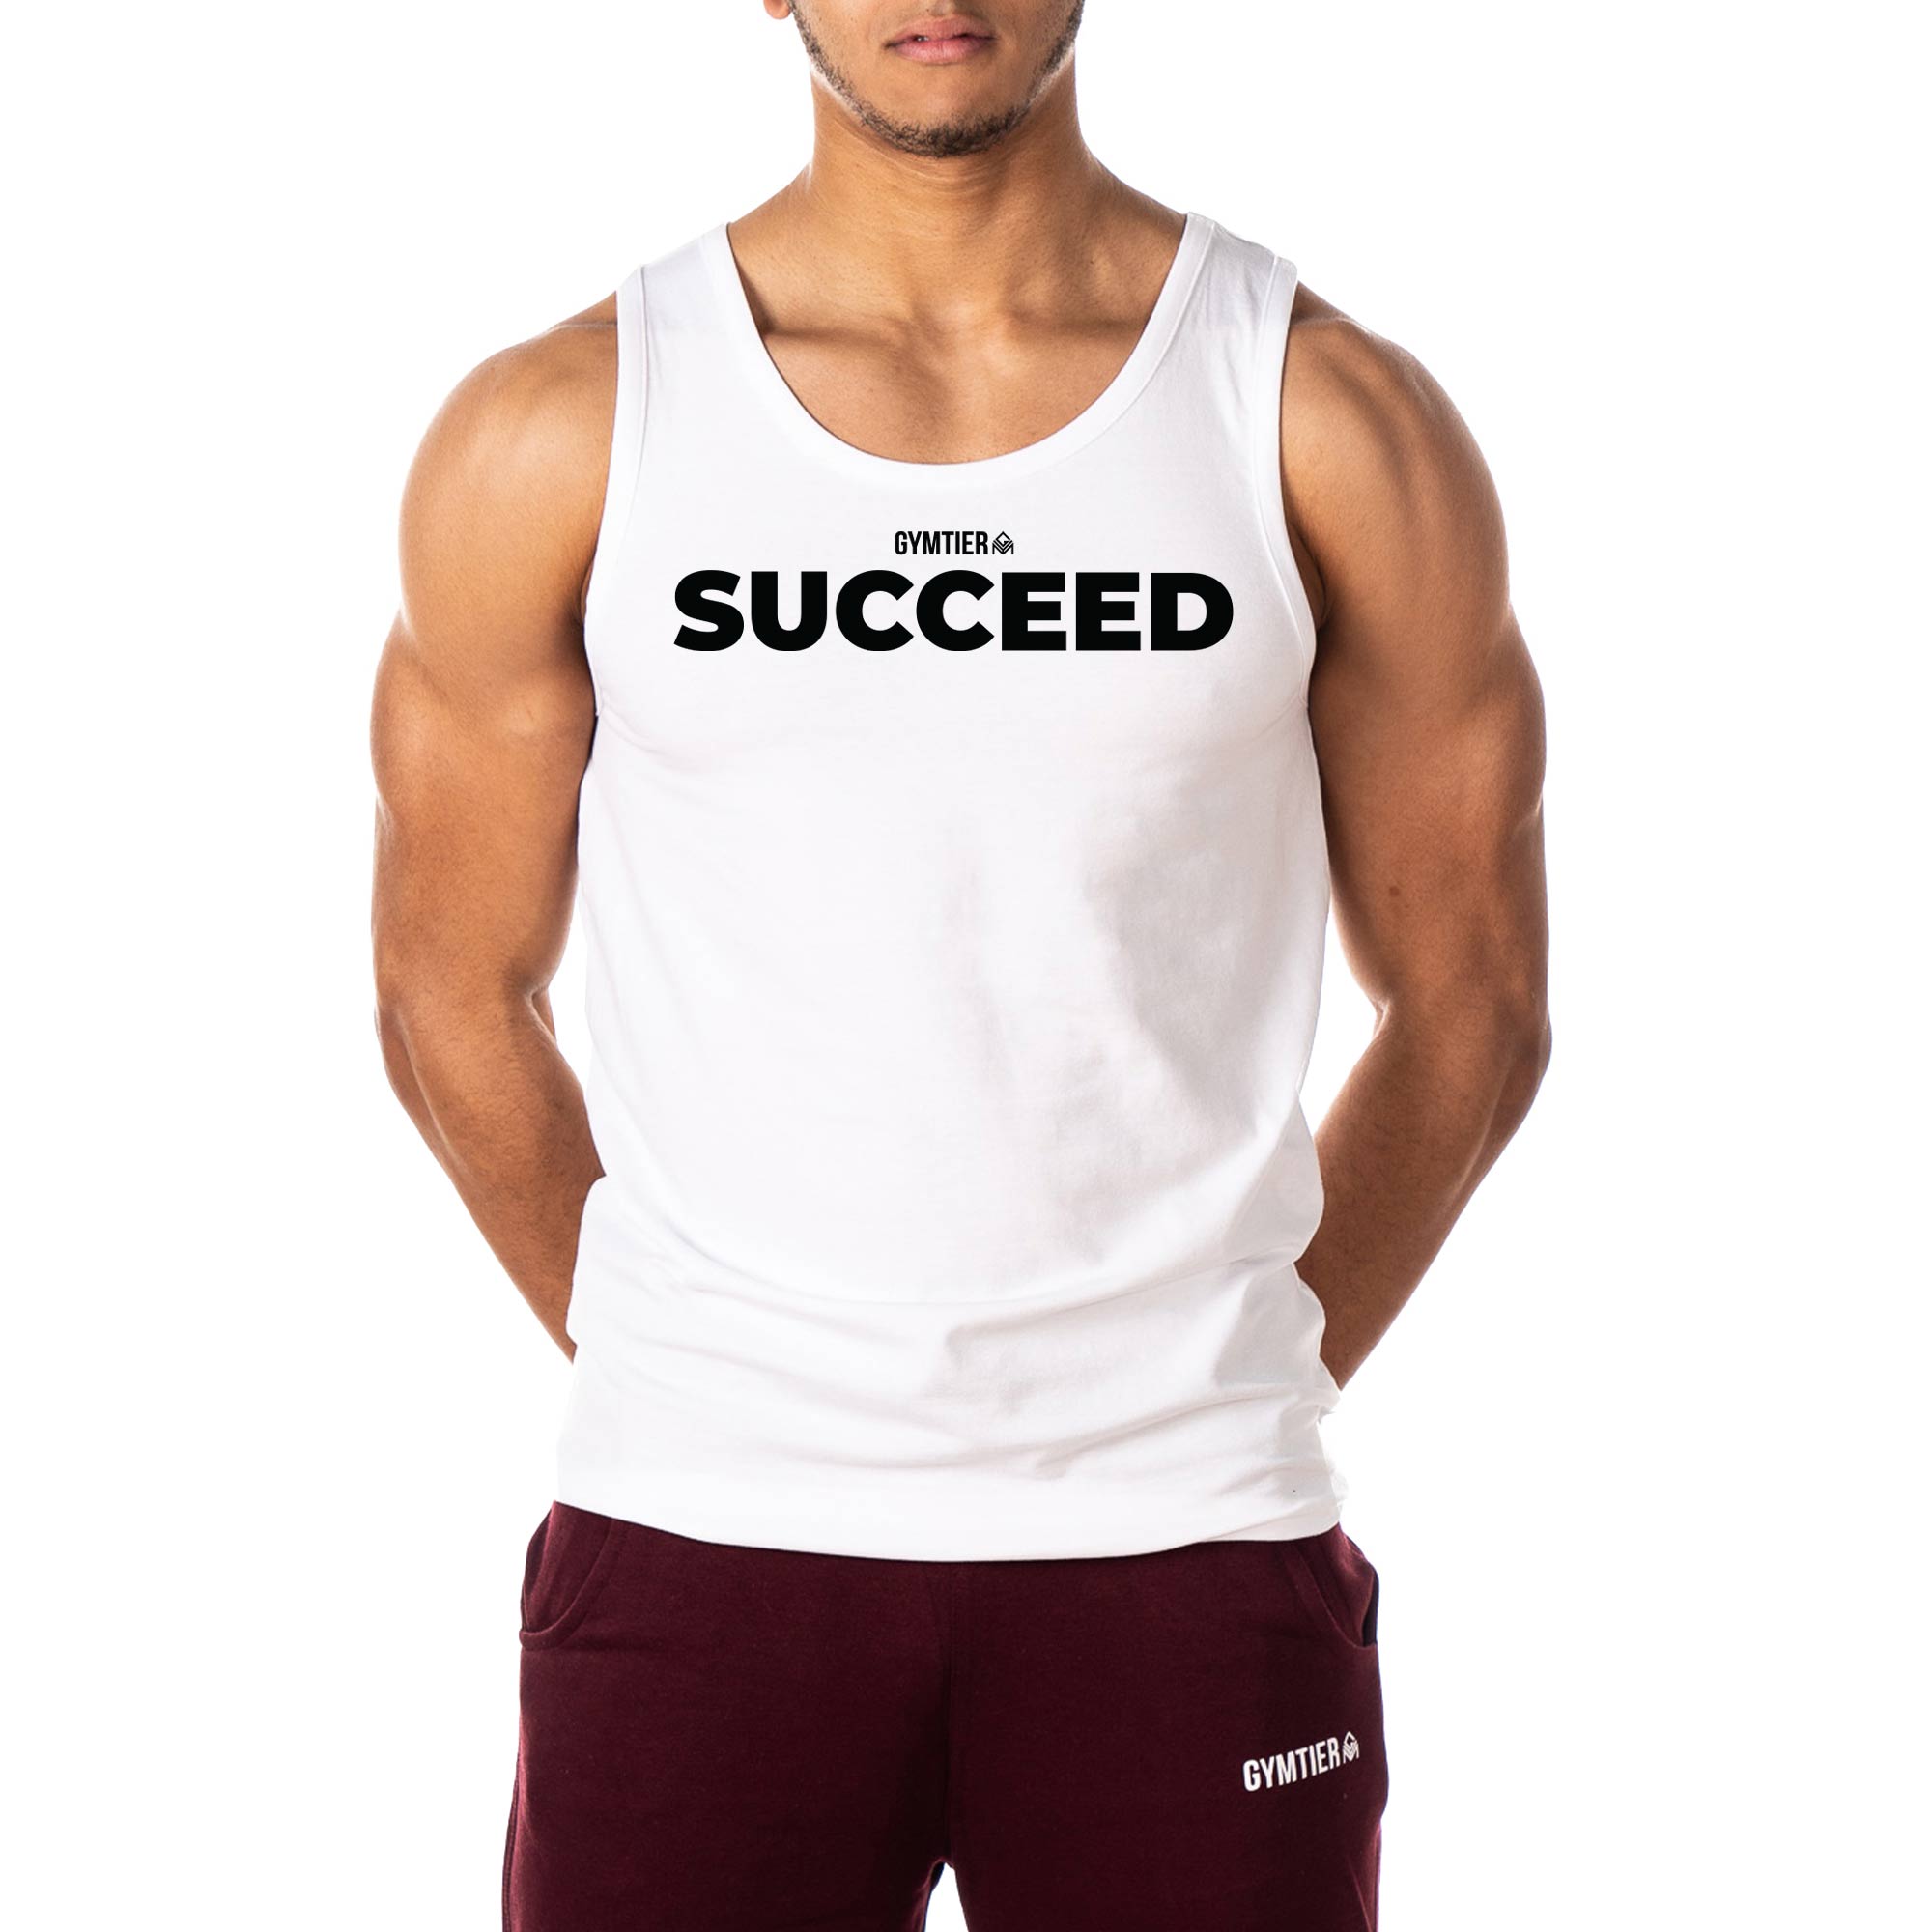 GYMTIER Succeed Gym Vest